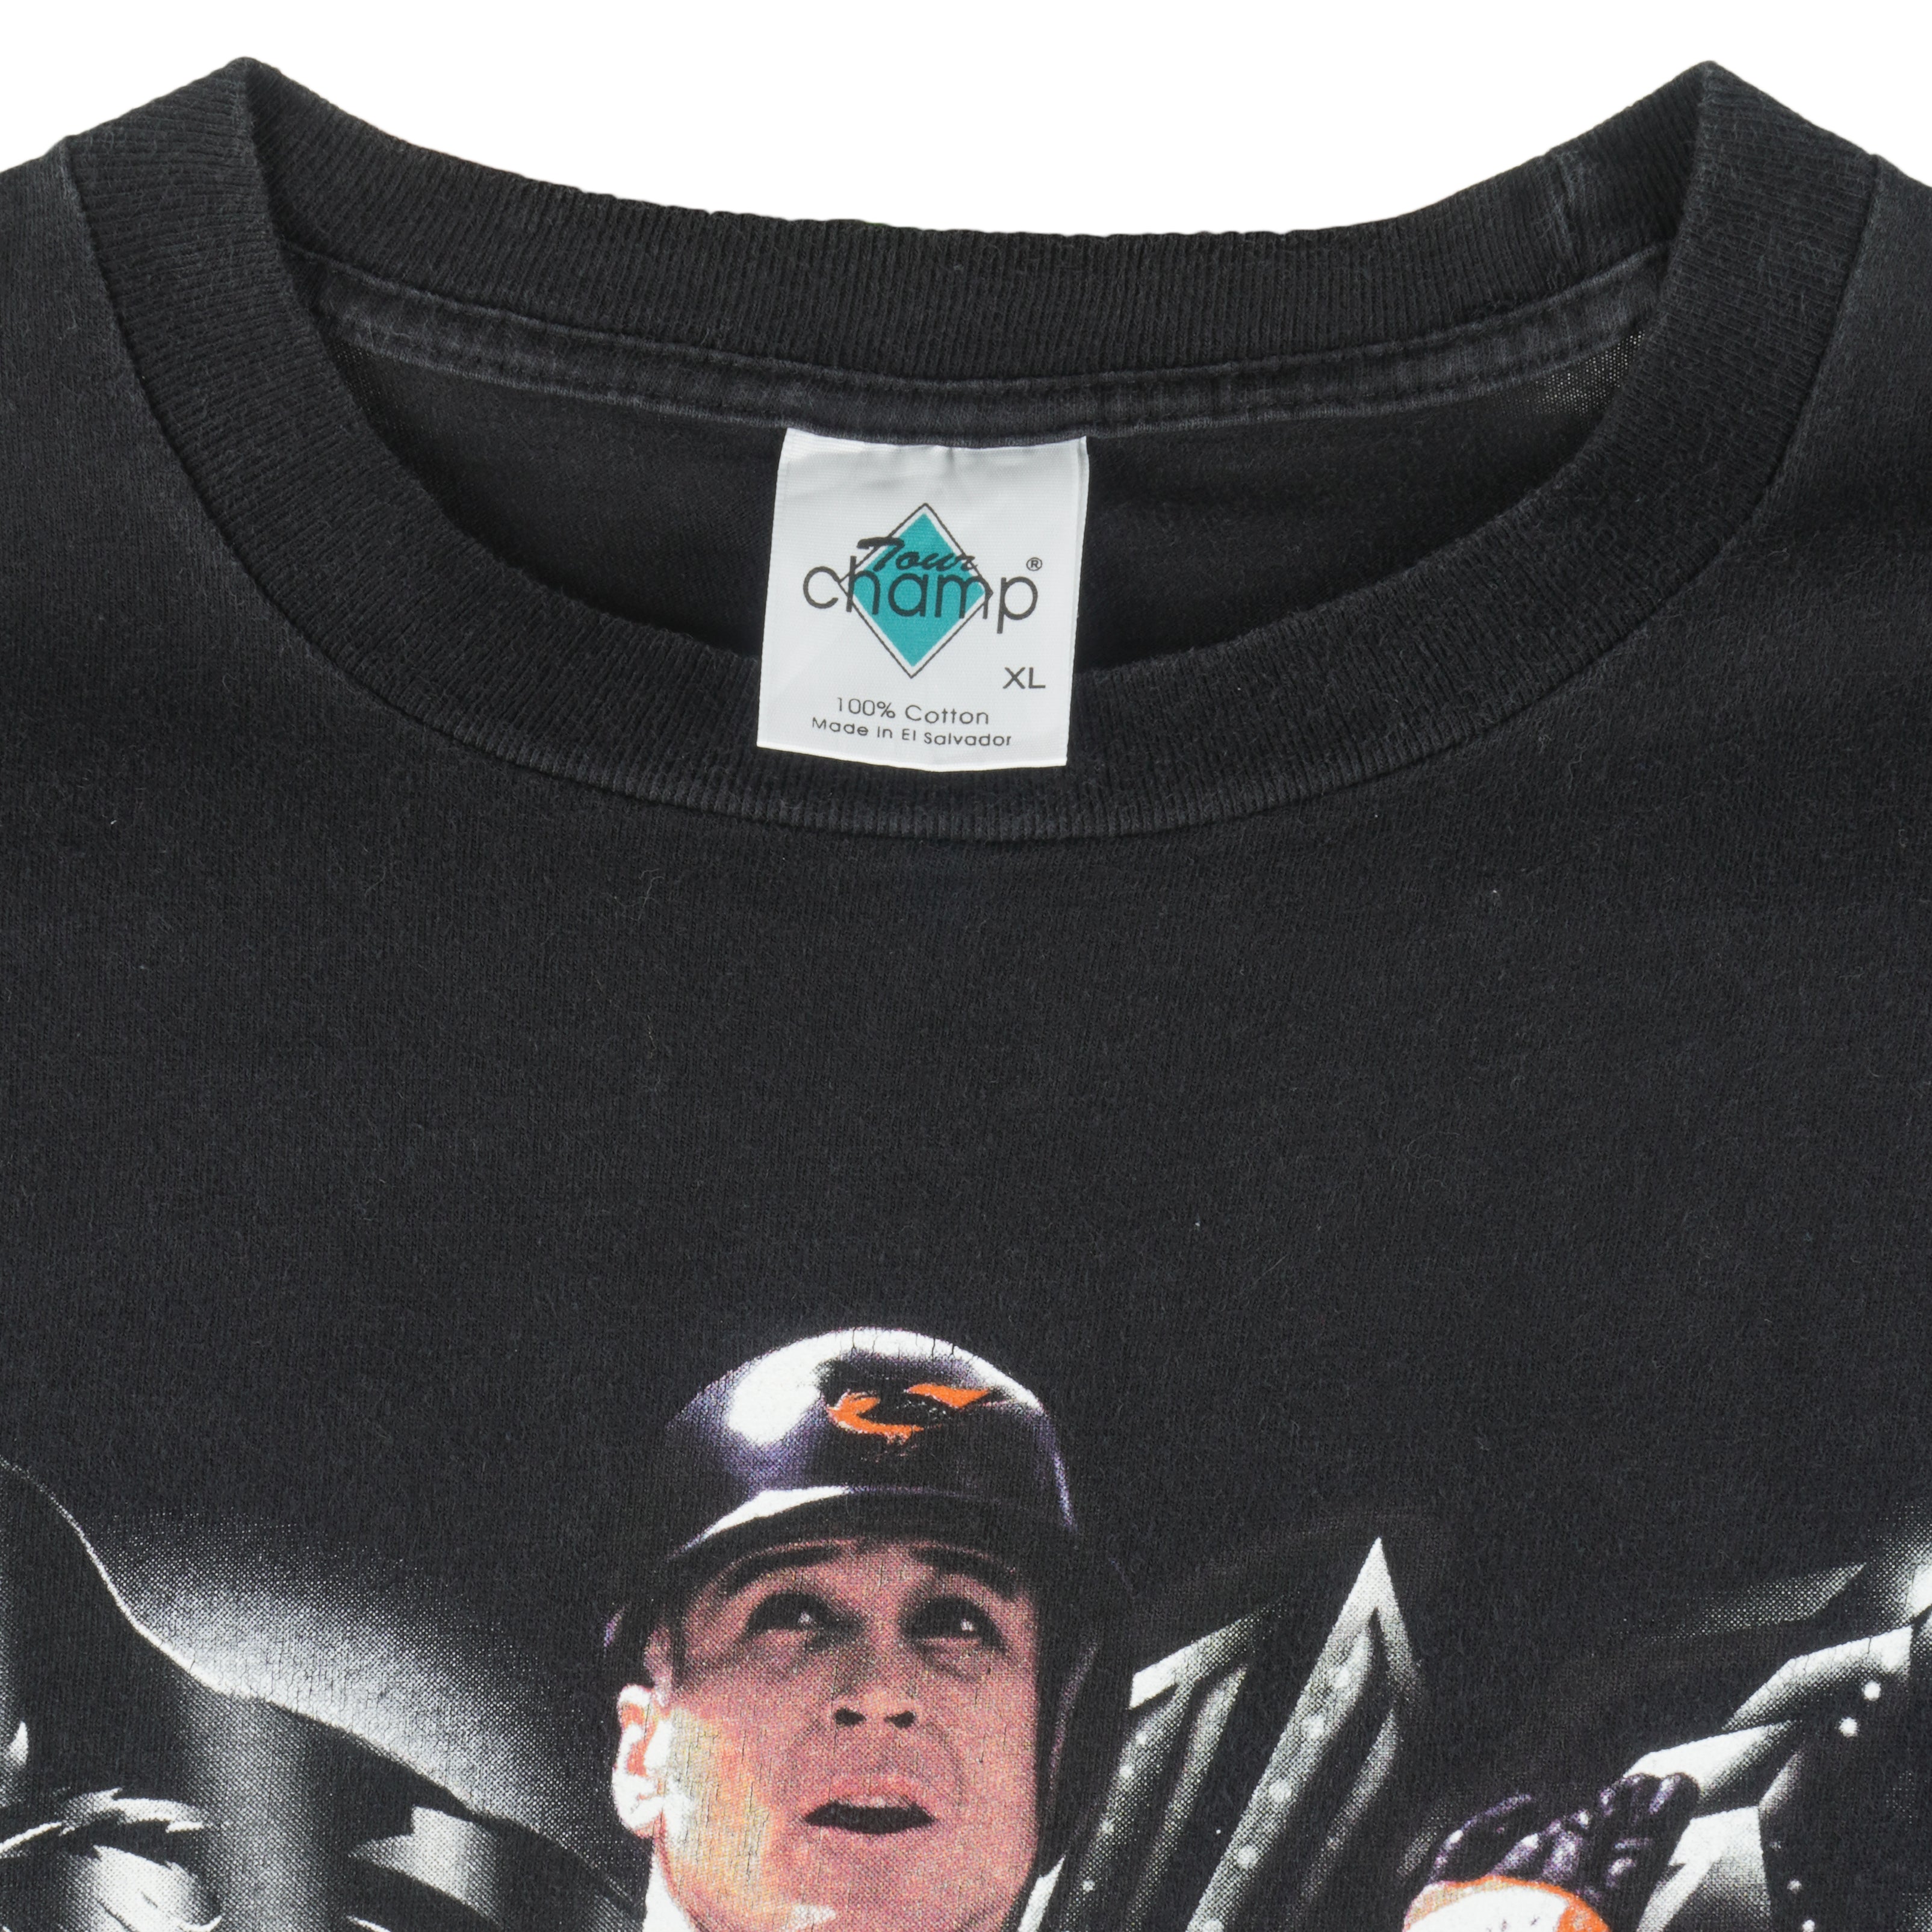 Baltimore Orioles T-Shirt MLB Baseball Team Champs 2022 Sport T Shirt  Vintage